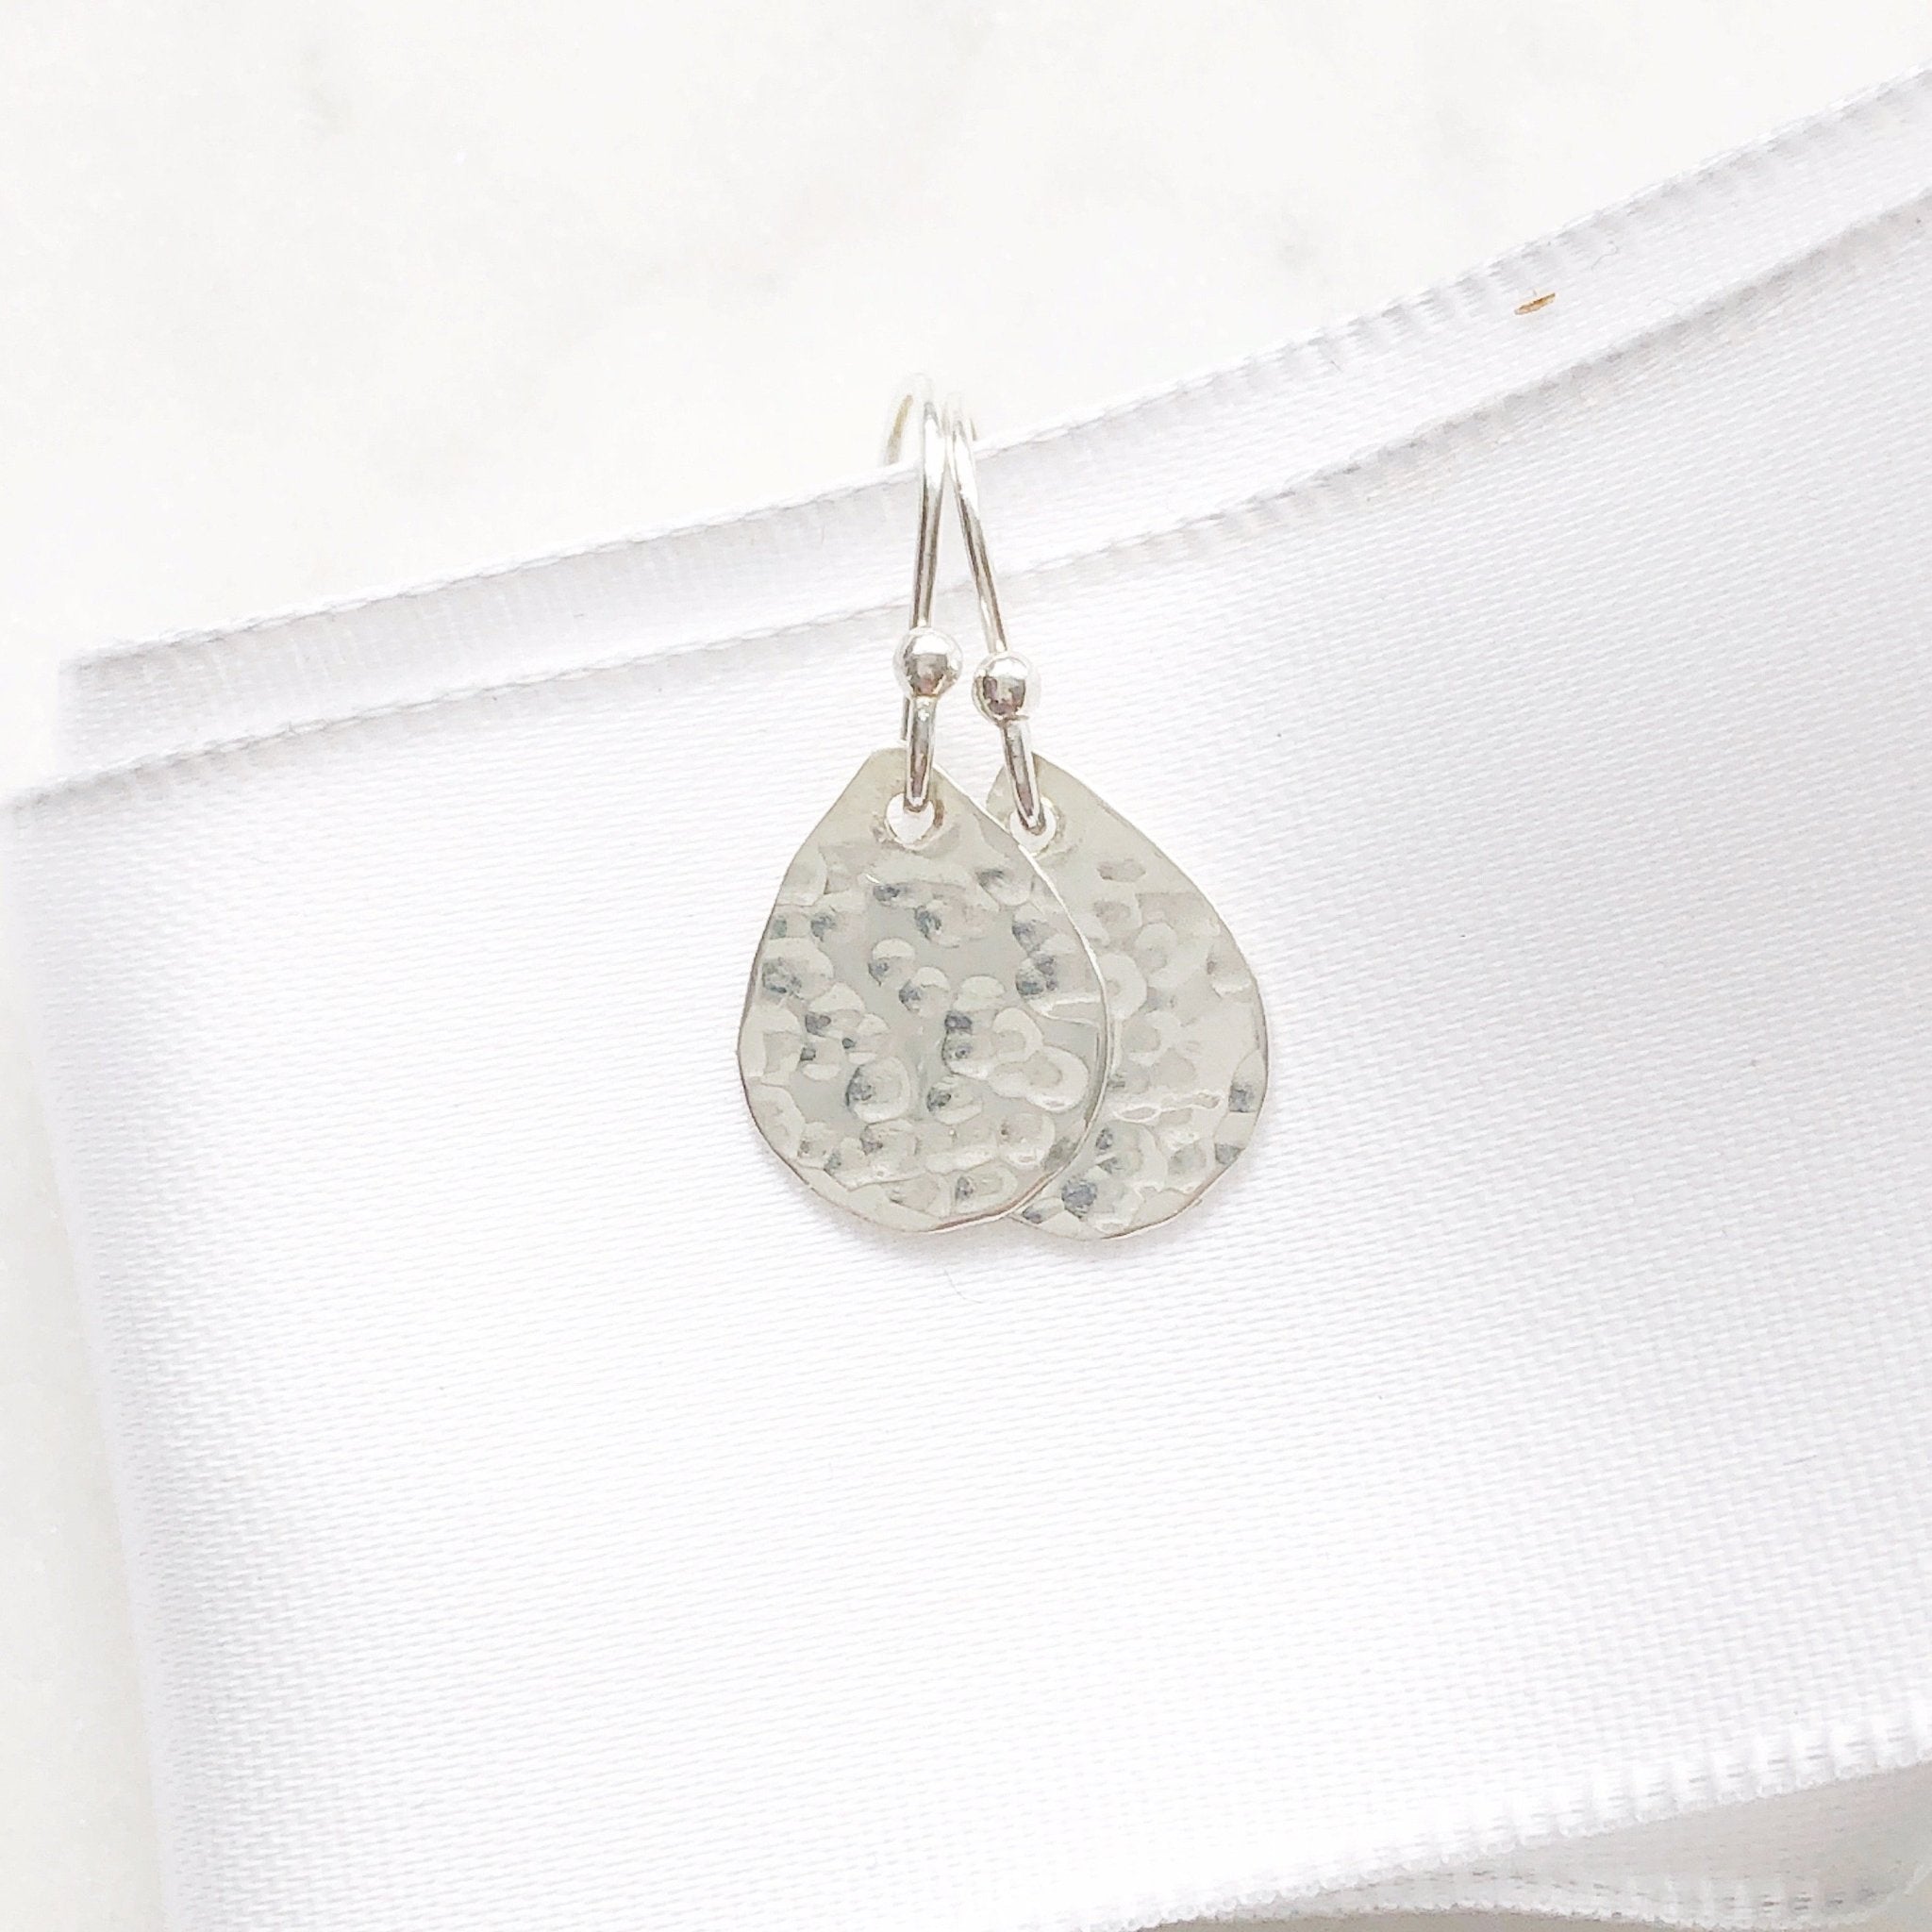 Silver Harvest Moon Earrings by Sarah Cornwell Jewelry. Dainty, textured silver teardrop earrings on a white background.